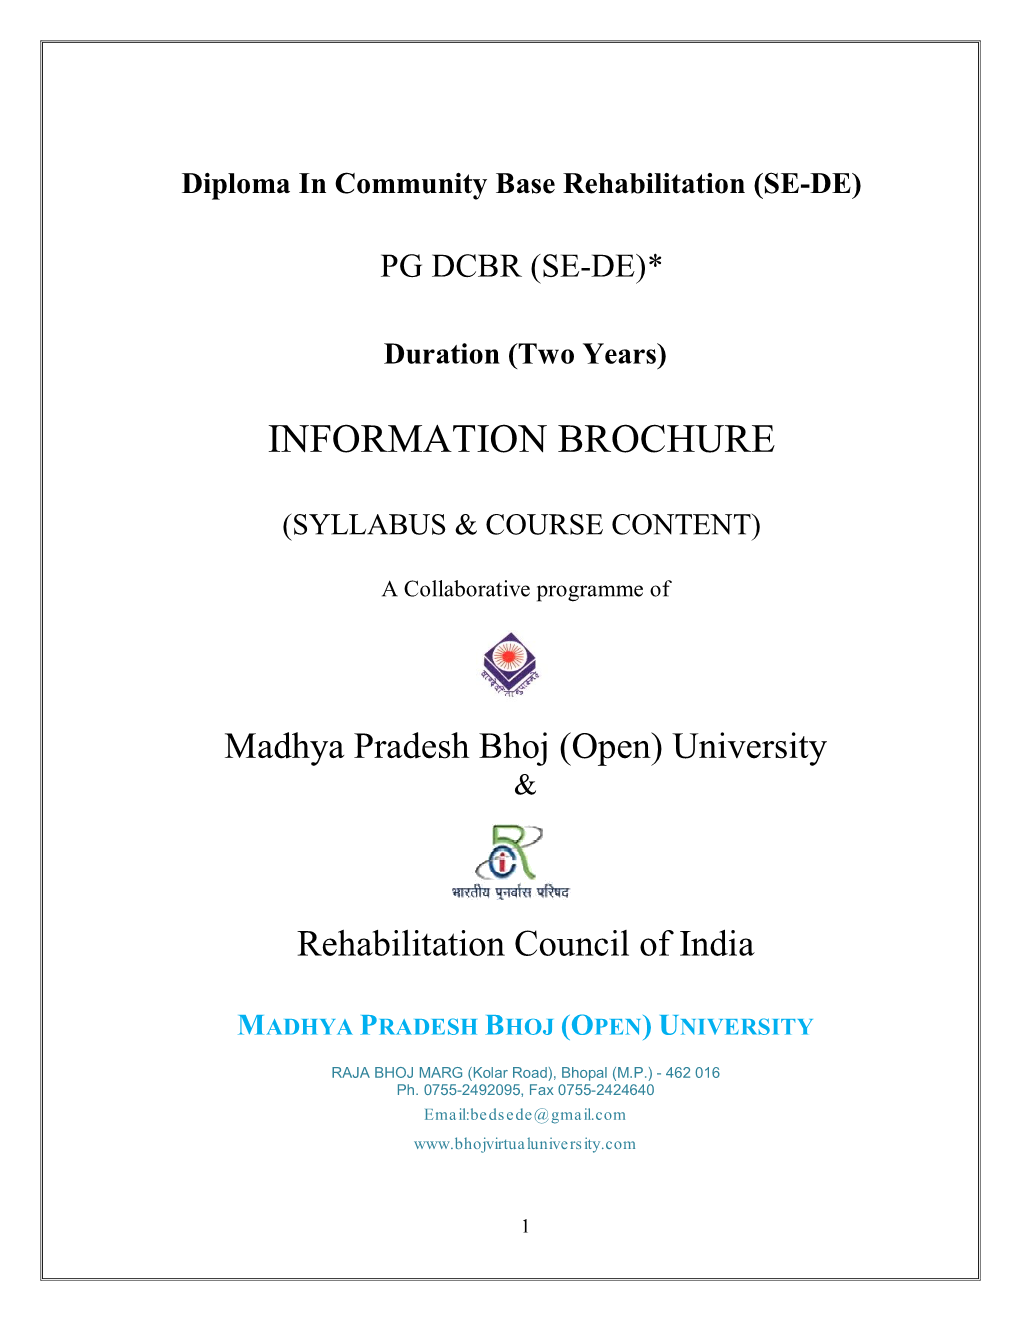 Diploma in Community Base Rehabilitation (SE-DE)